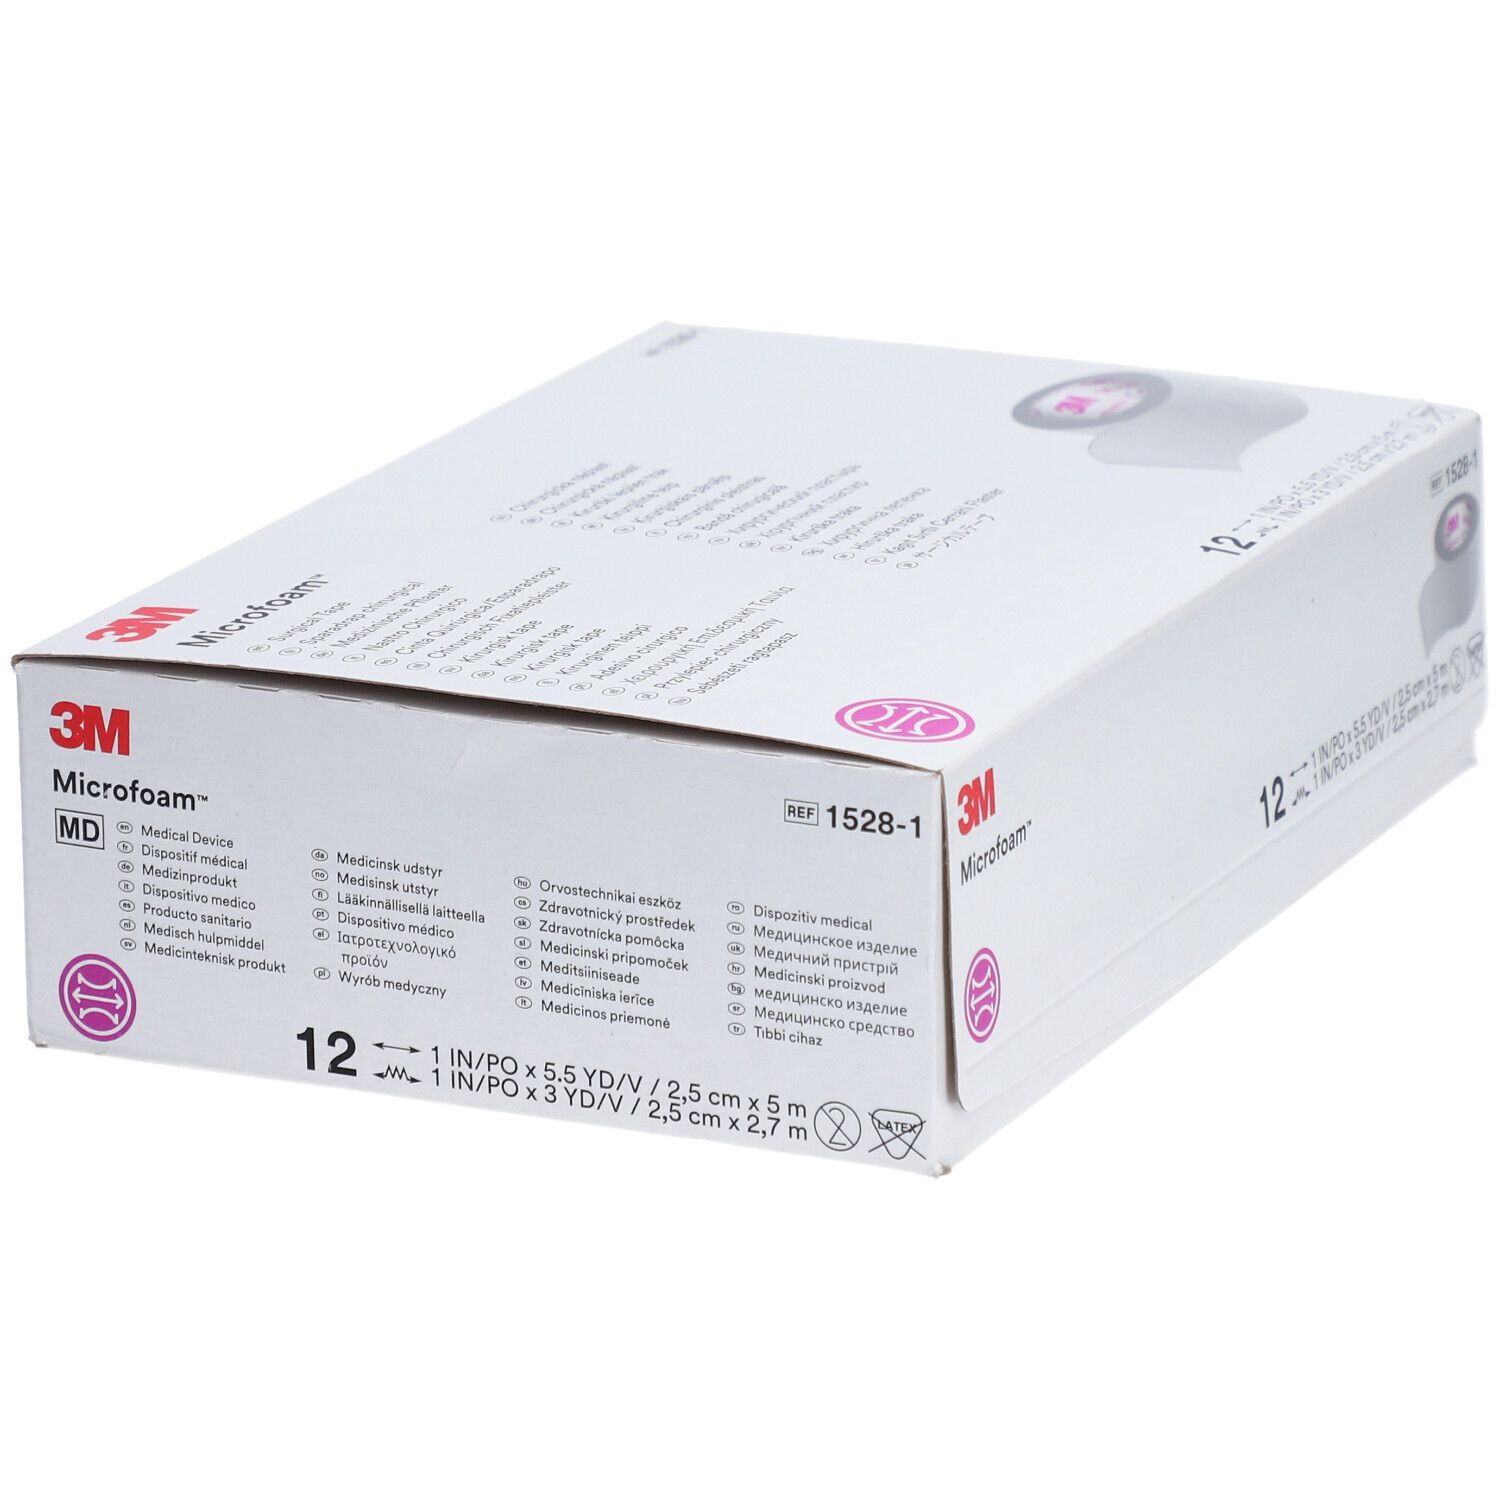 3M™ Microfoam™ medizinische Pflaster 2,5 cm x 5 m